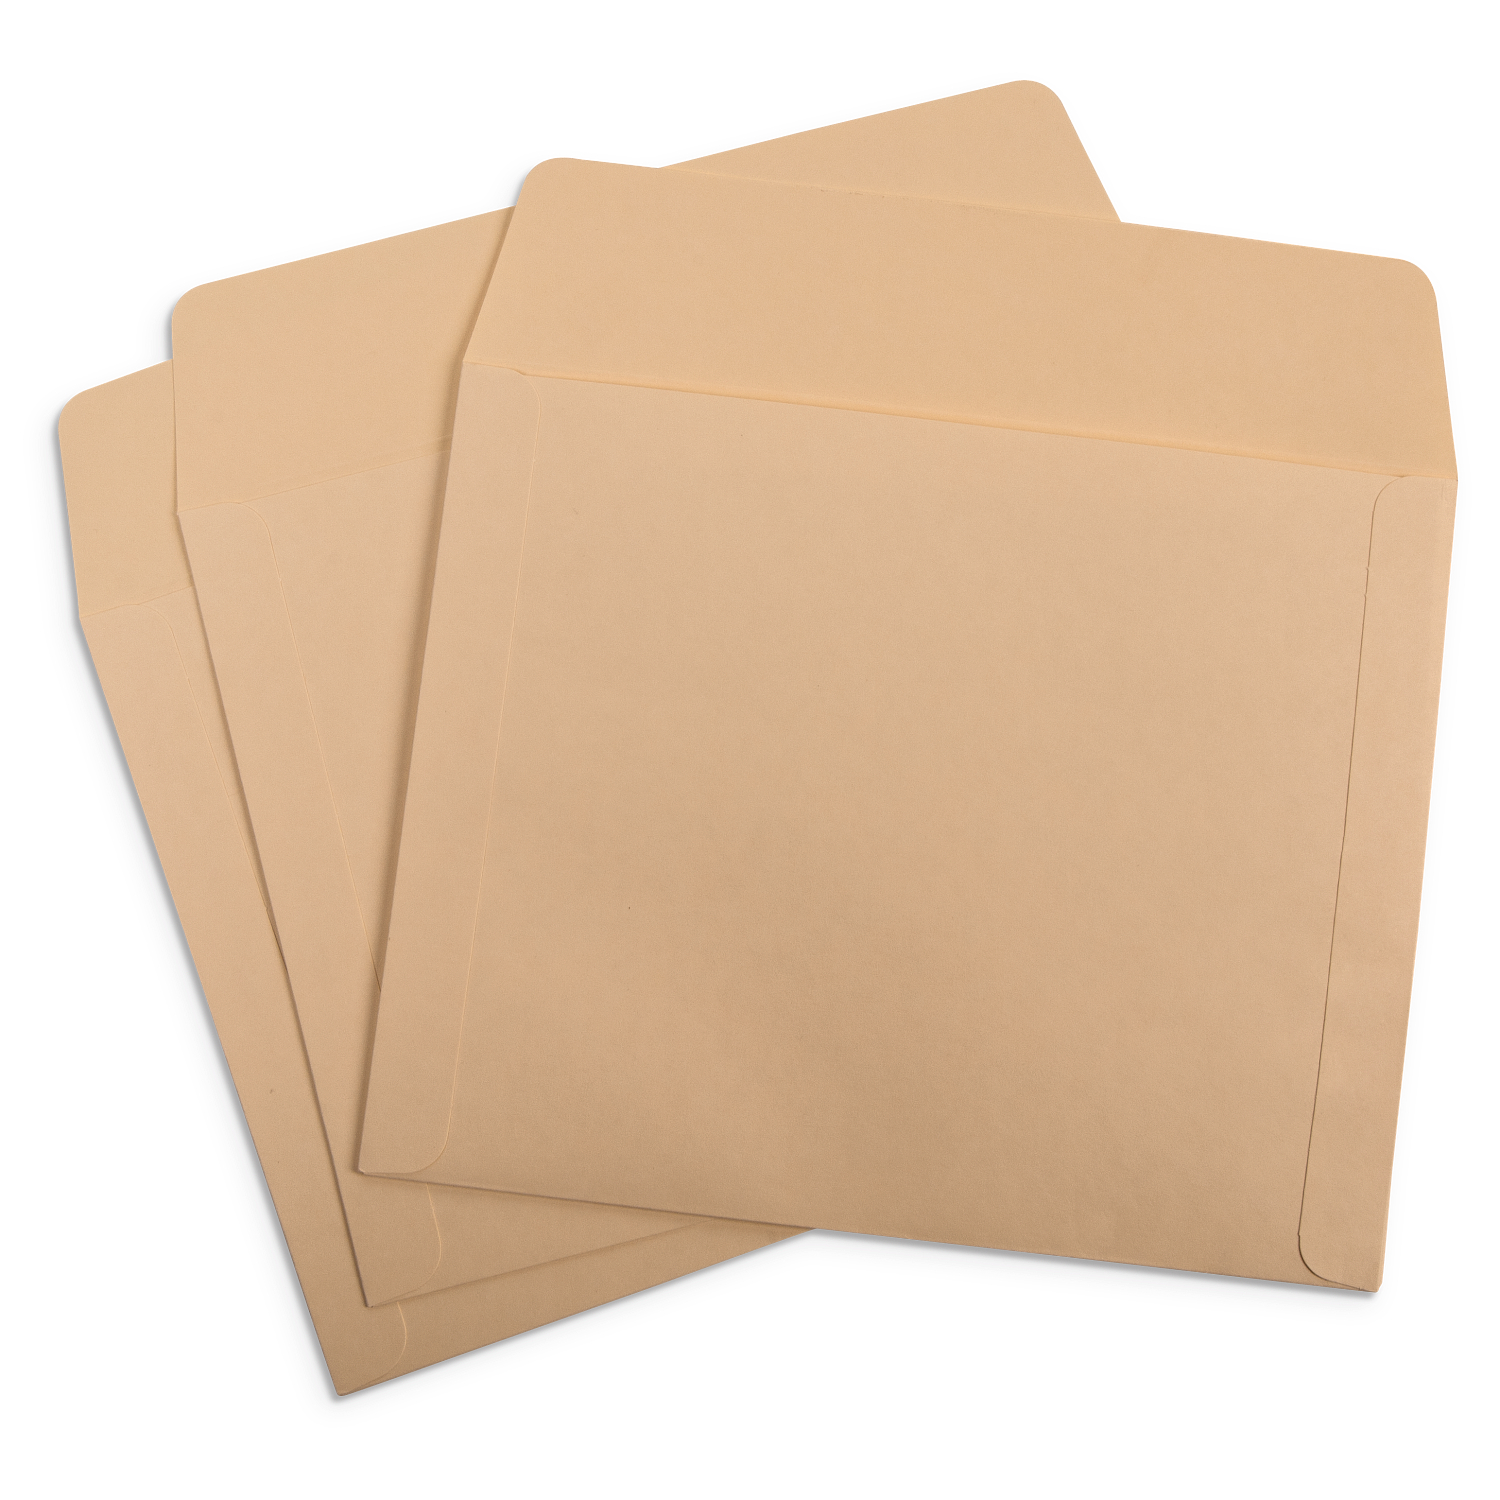 Envelope Sizes with Corresponding Insert Sizes - Cornerstone Services, Inc.  Hudson Valley, NY